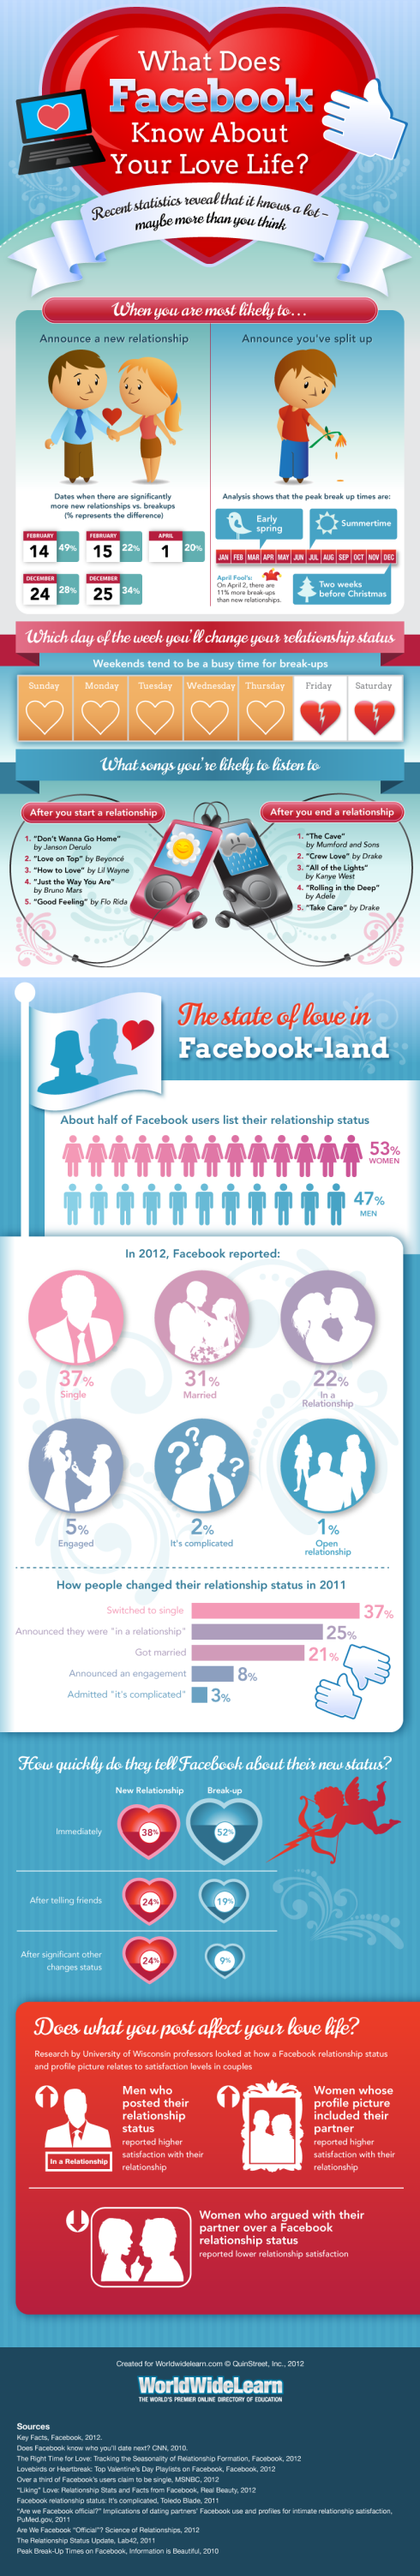 facebook-love-life, marketingando